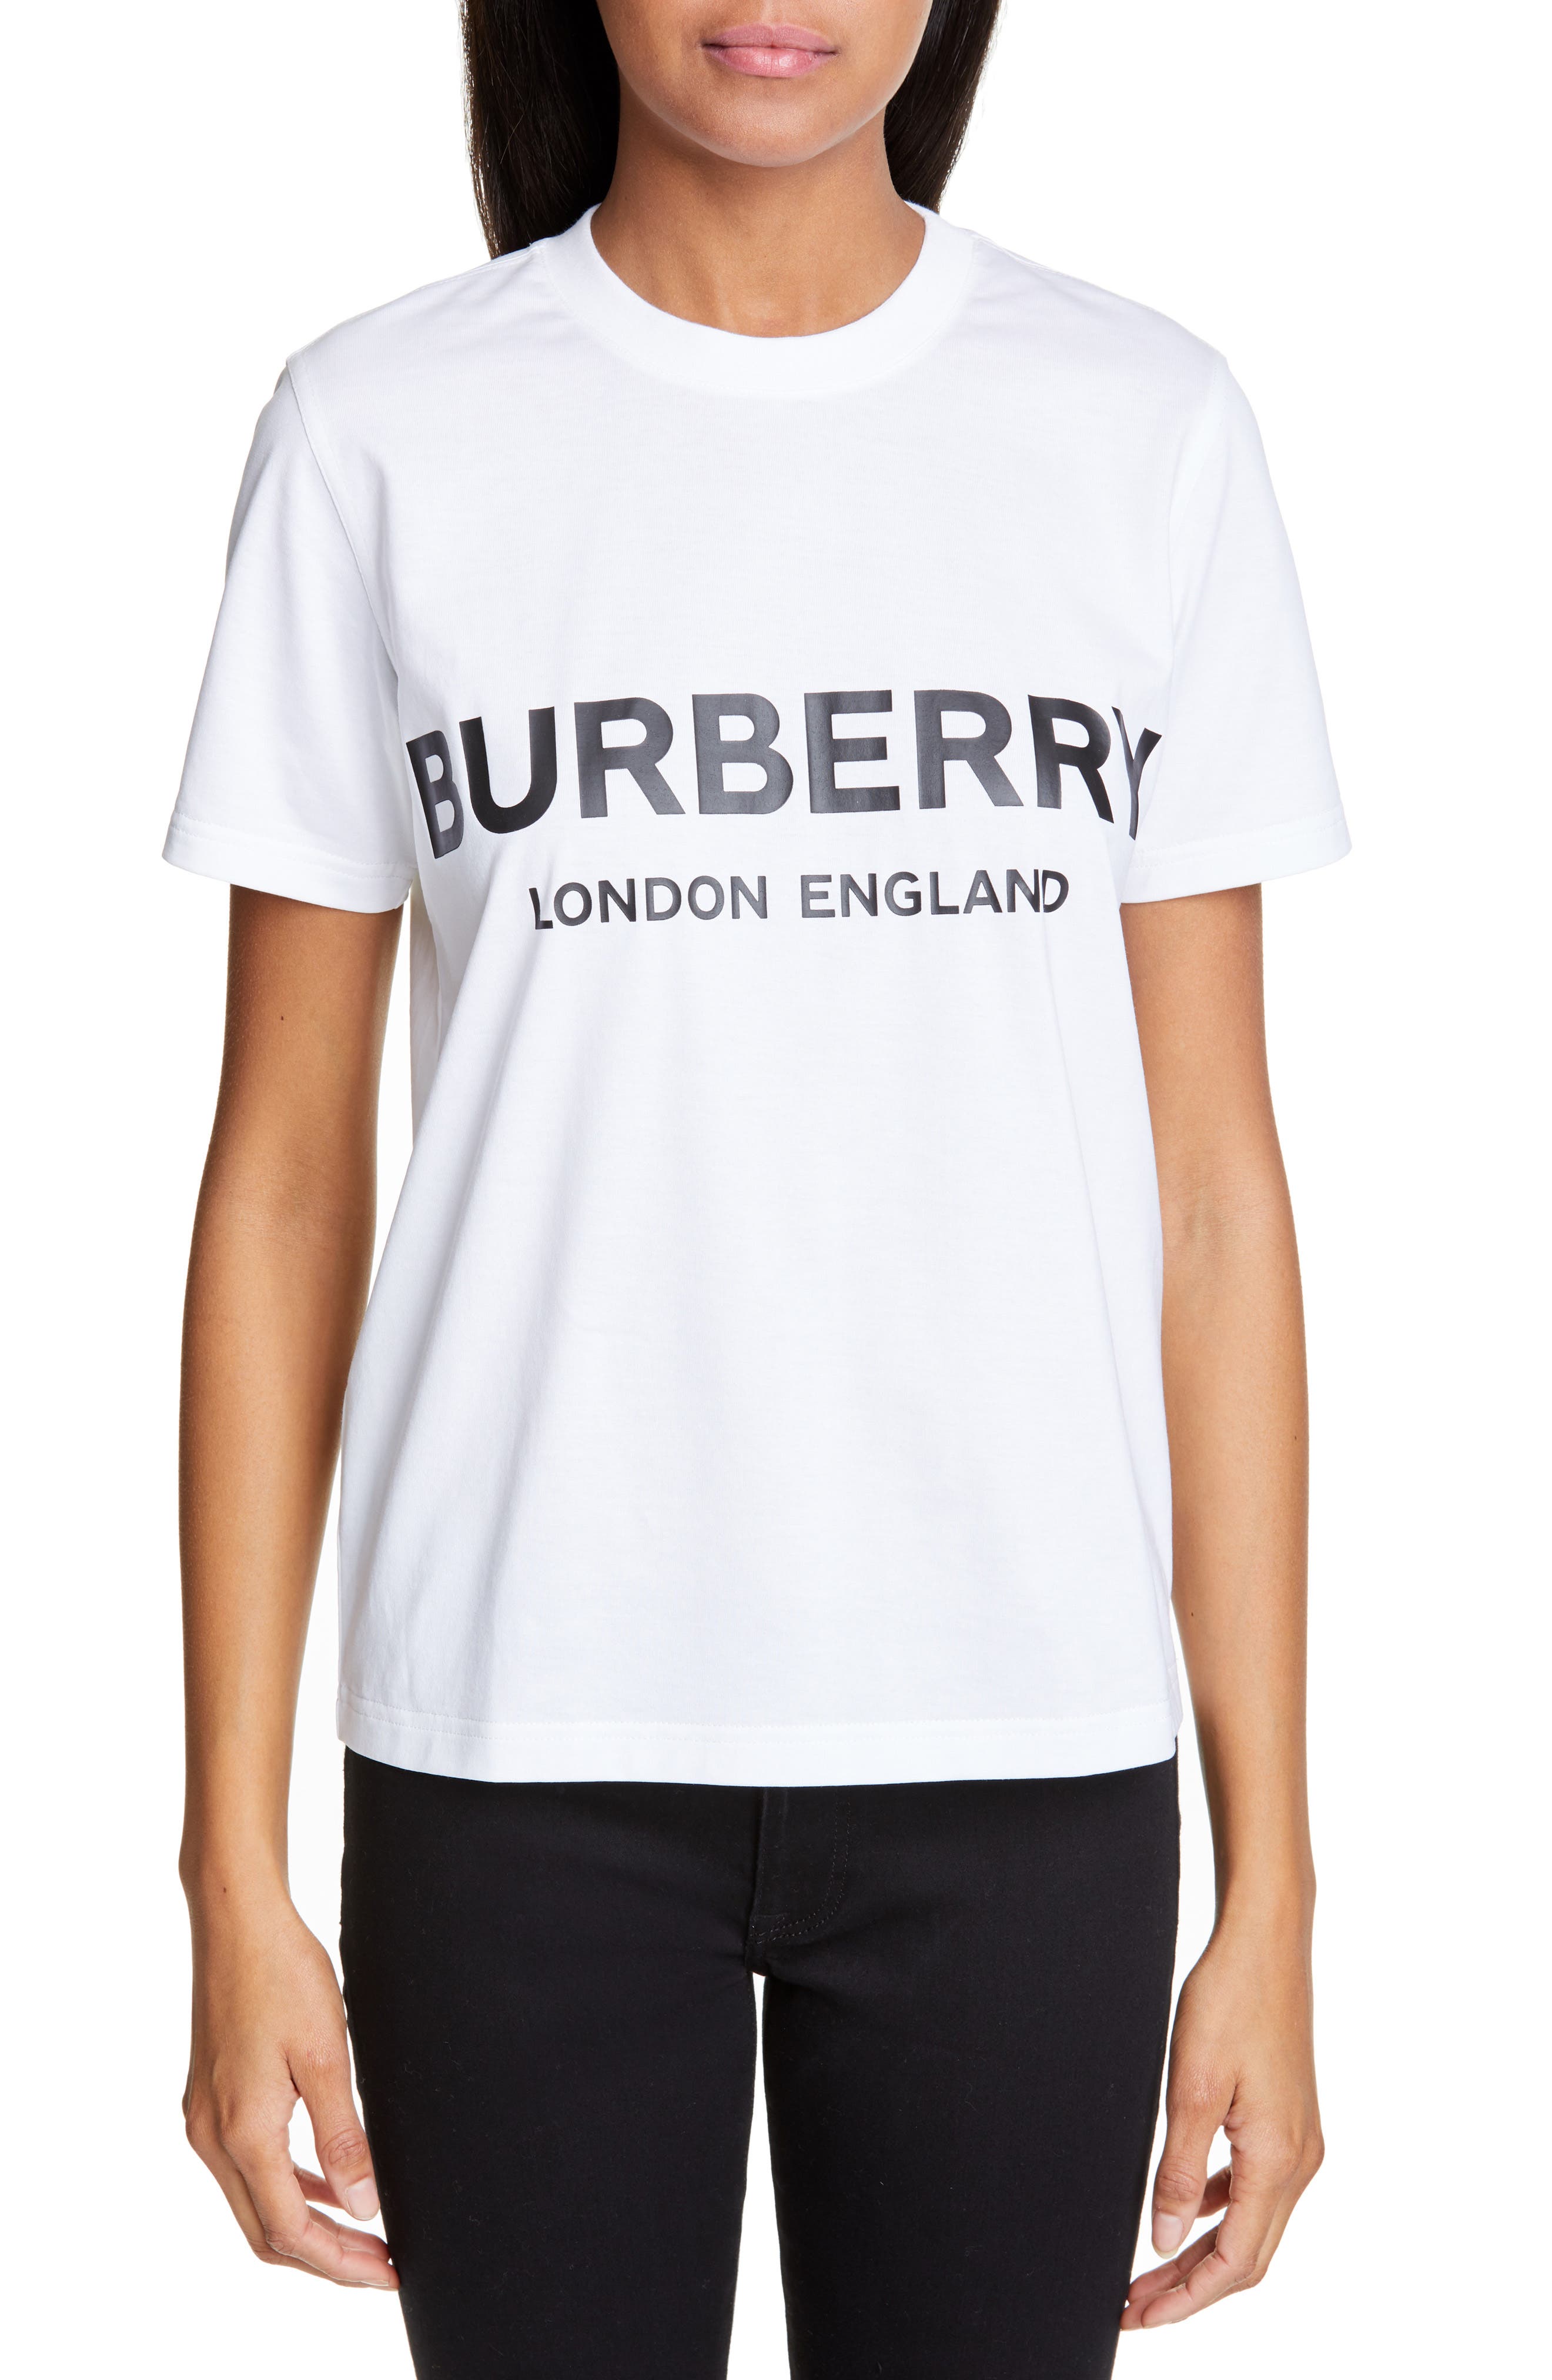 burberry print shirt womens